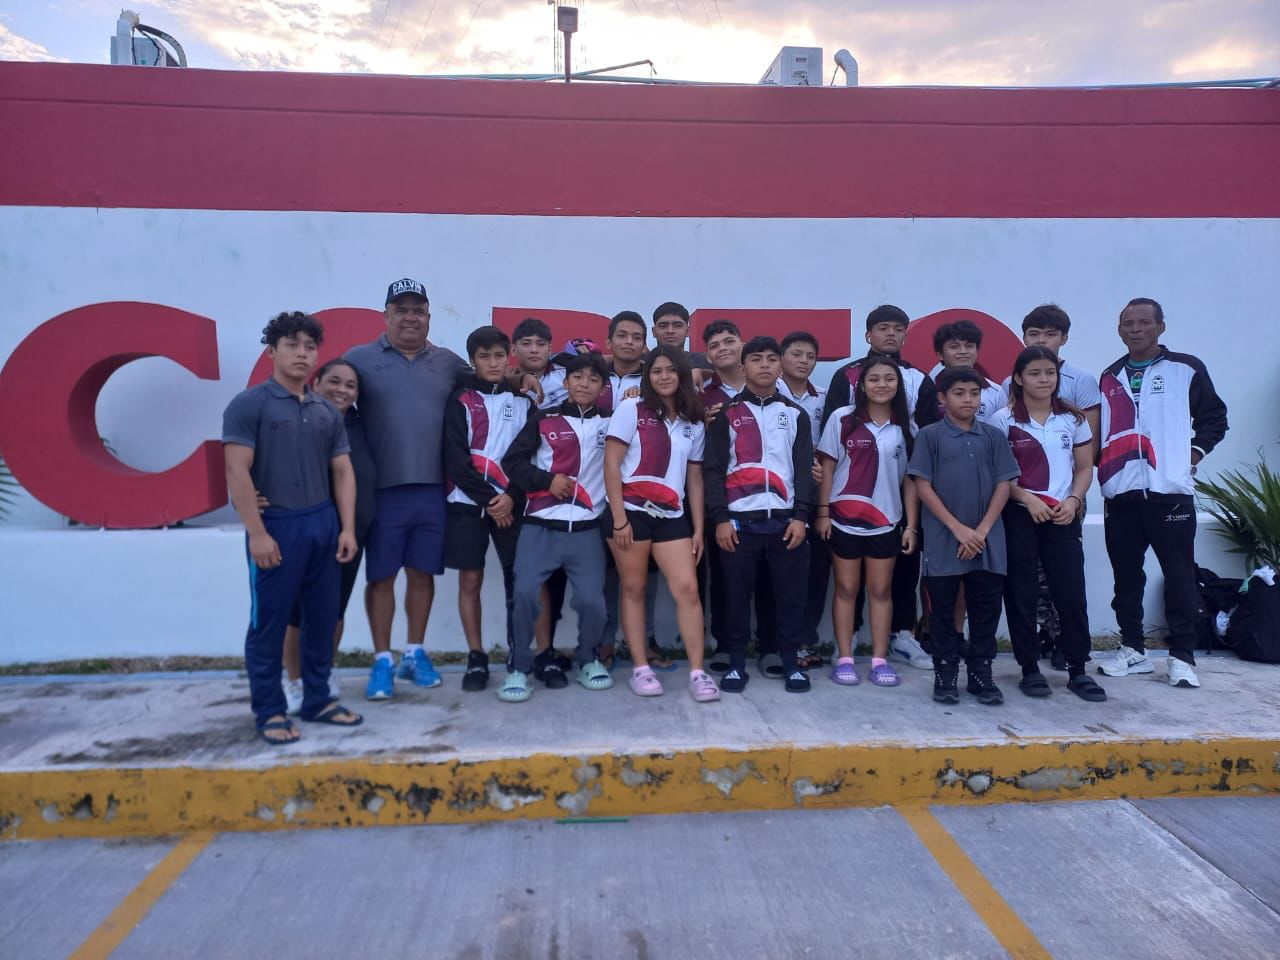 Rumbo al Grand Prix: Luchadores de Quintana Roo Marcan su Camino a la Victoria